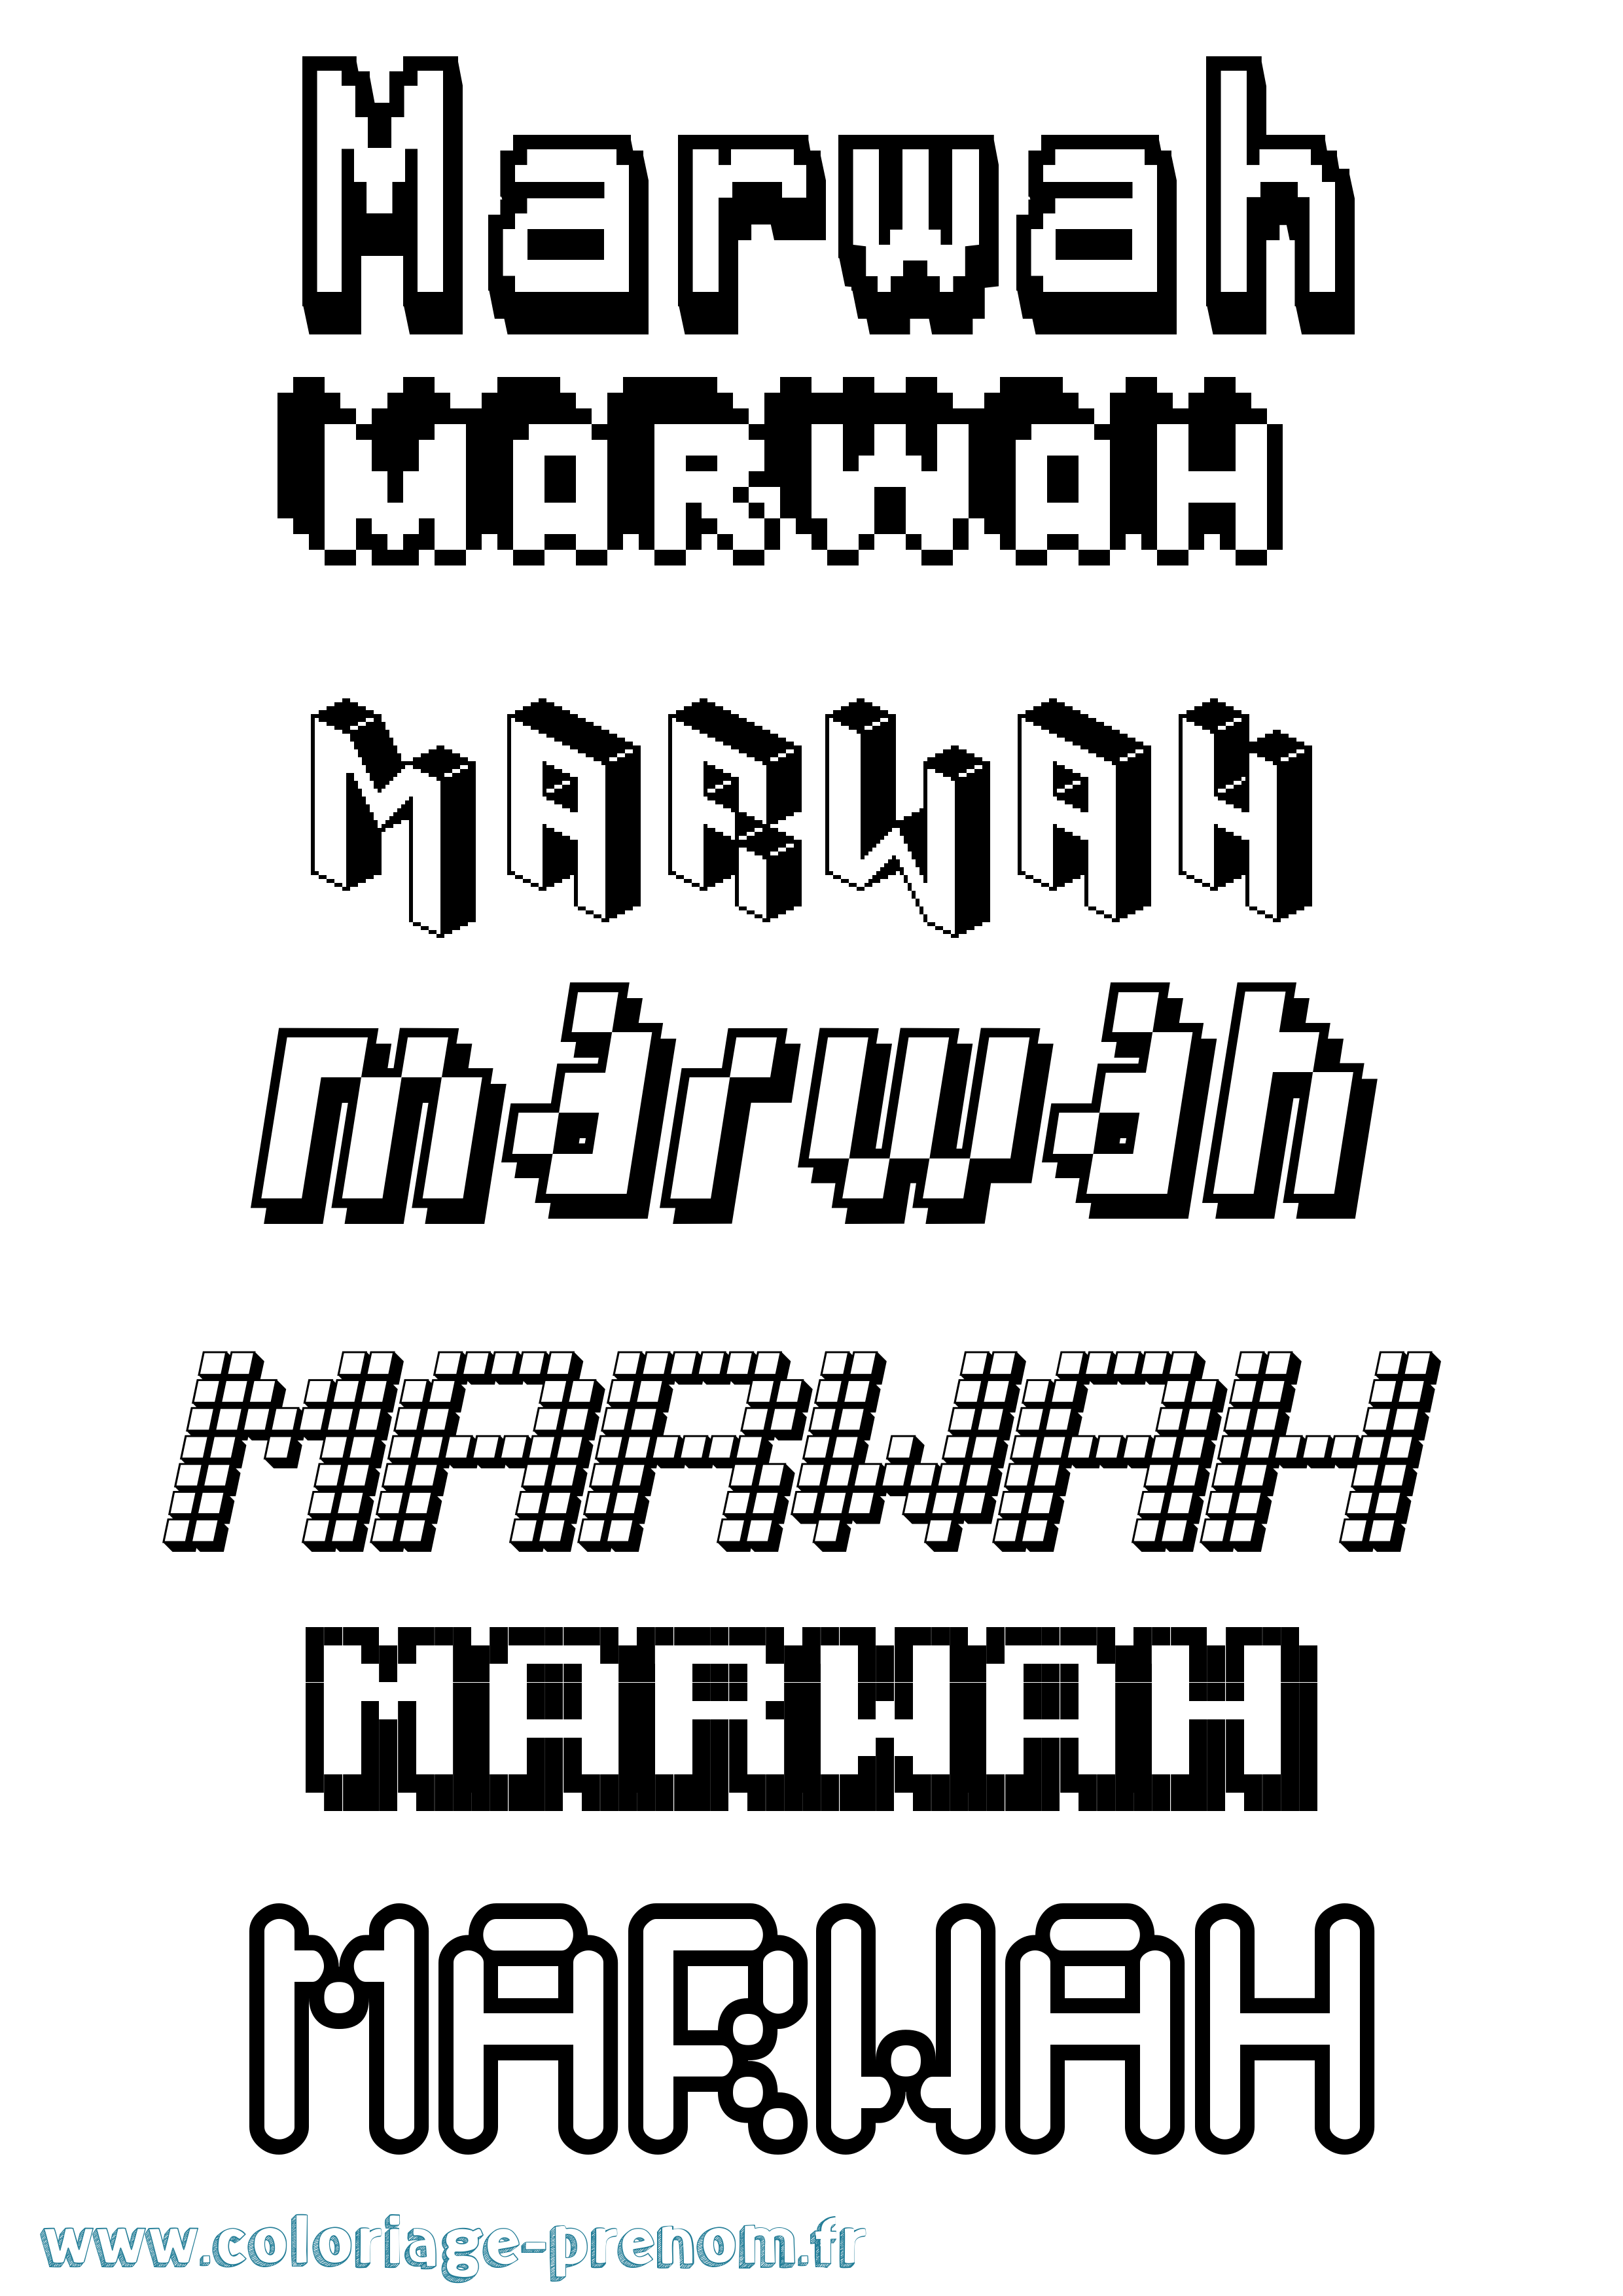 Coloriage prénom Marwah Pixel